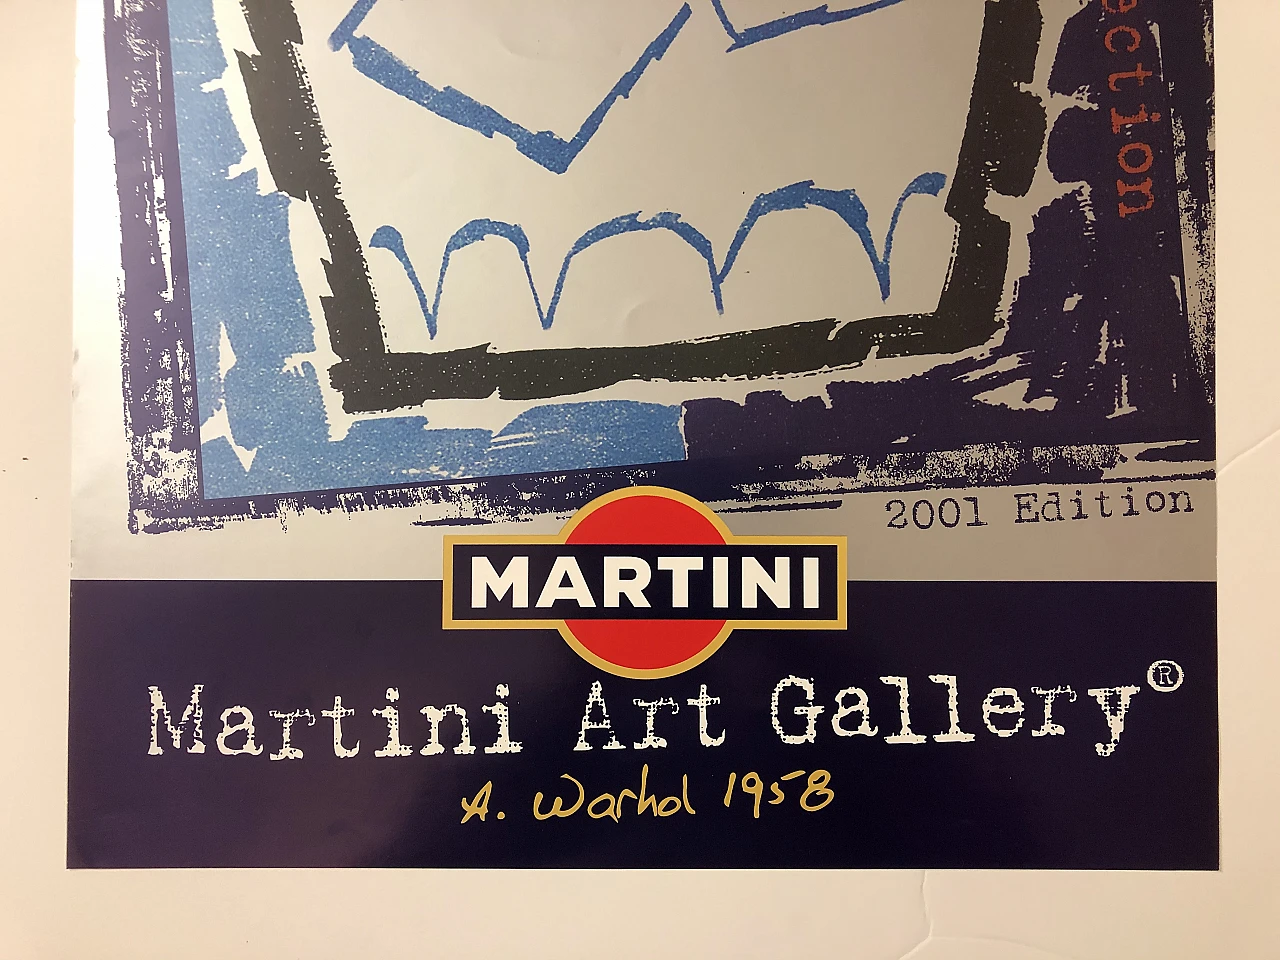 Da Andy Warhol, Martini Art Gallery, litografia, 2001 7